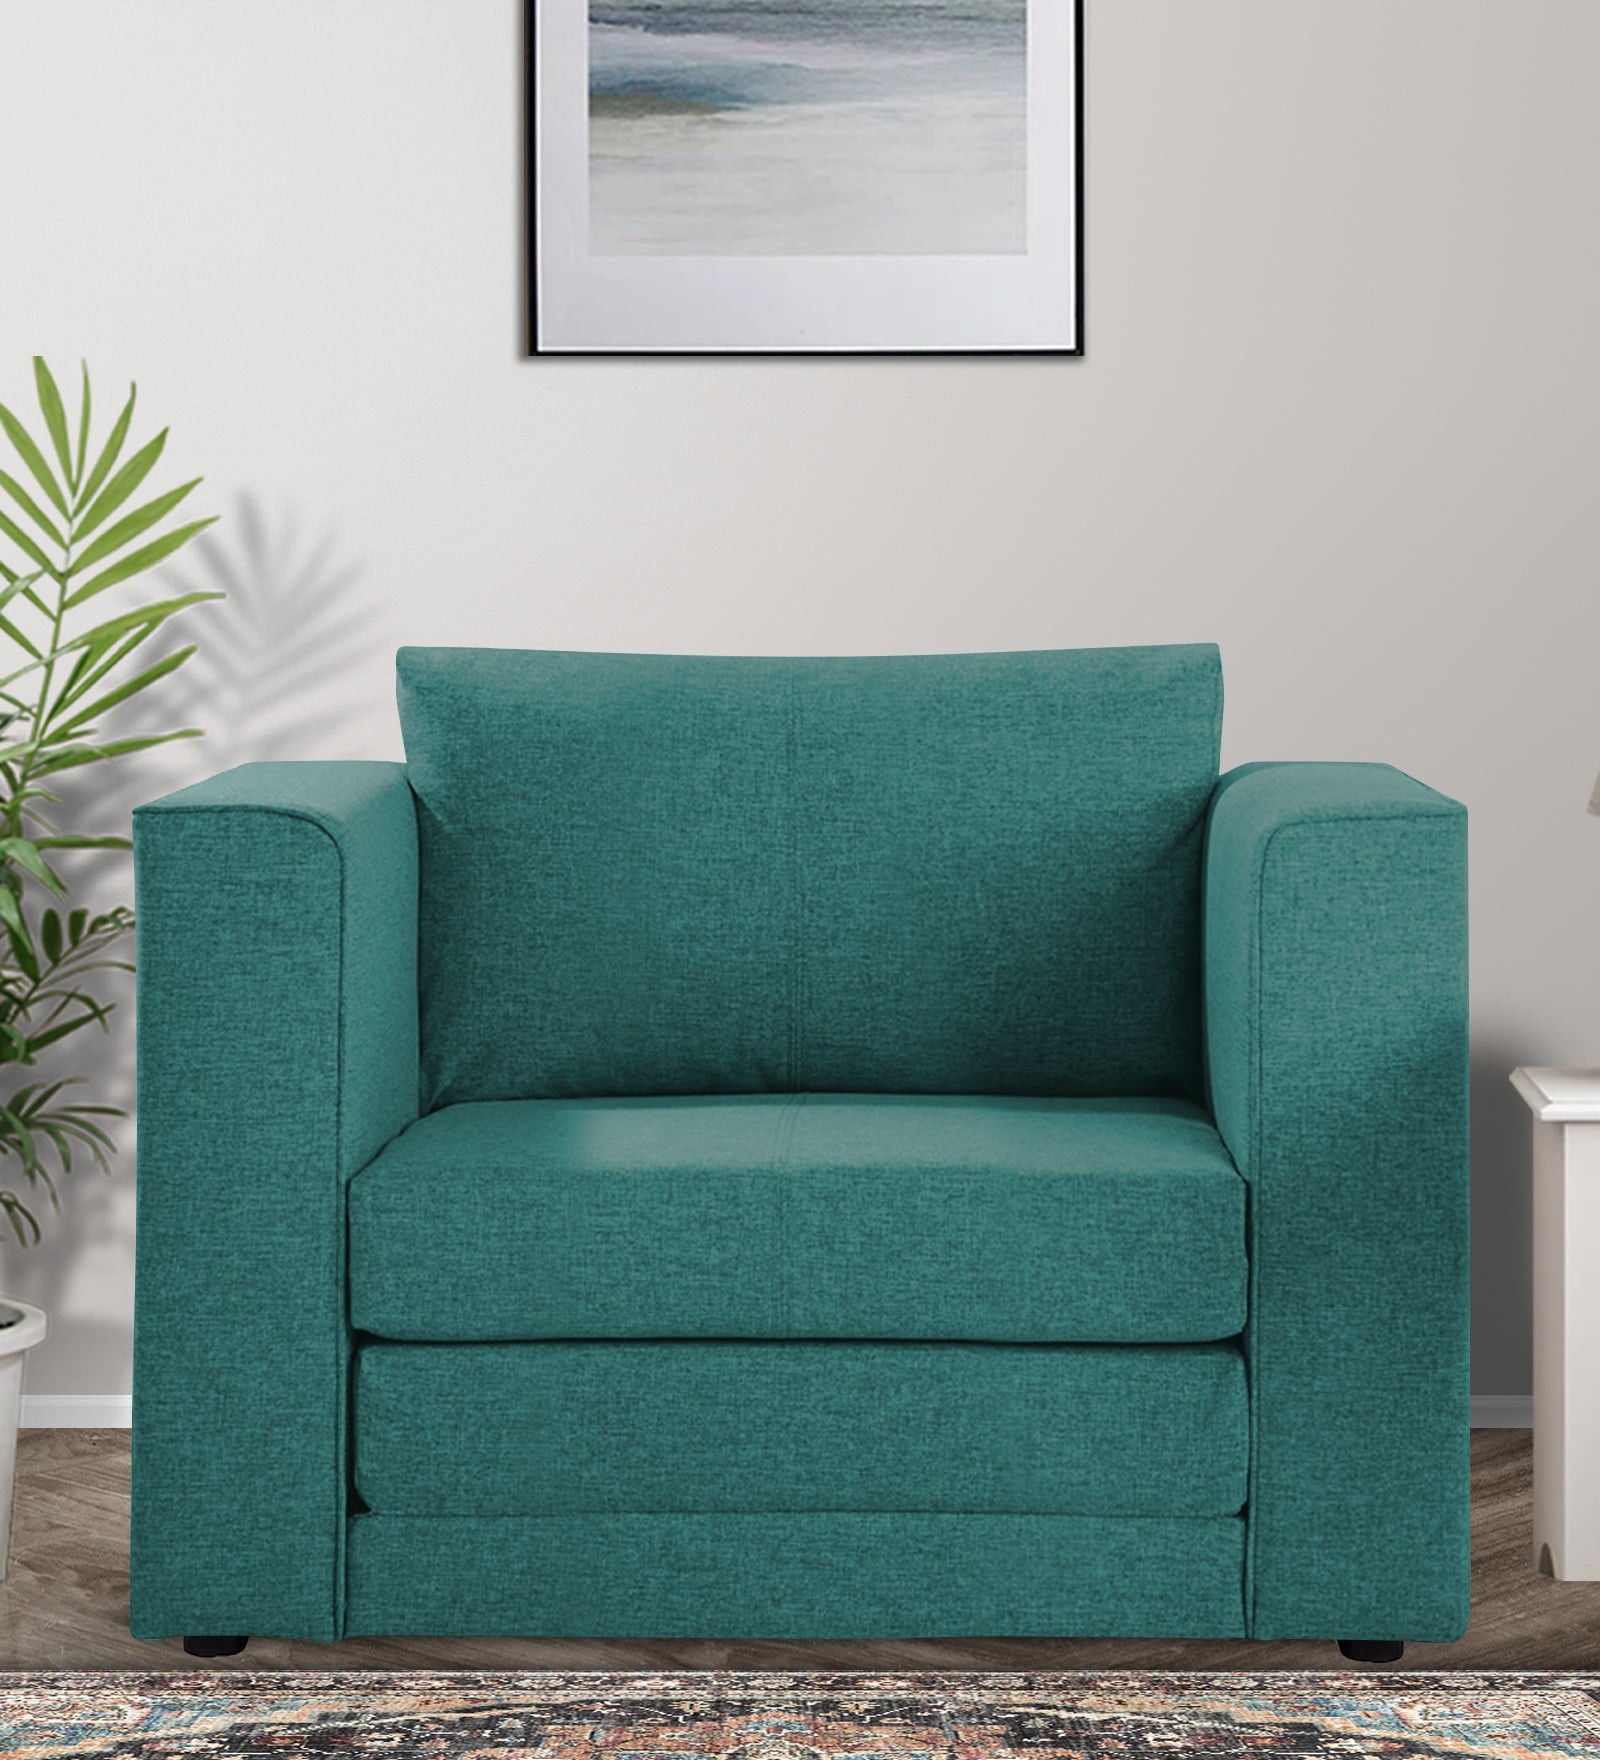 Kenia Fabric 1 Seater Convertible Sofa Cum Bed in Sea Green Colour